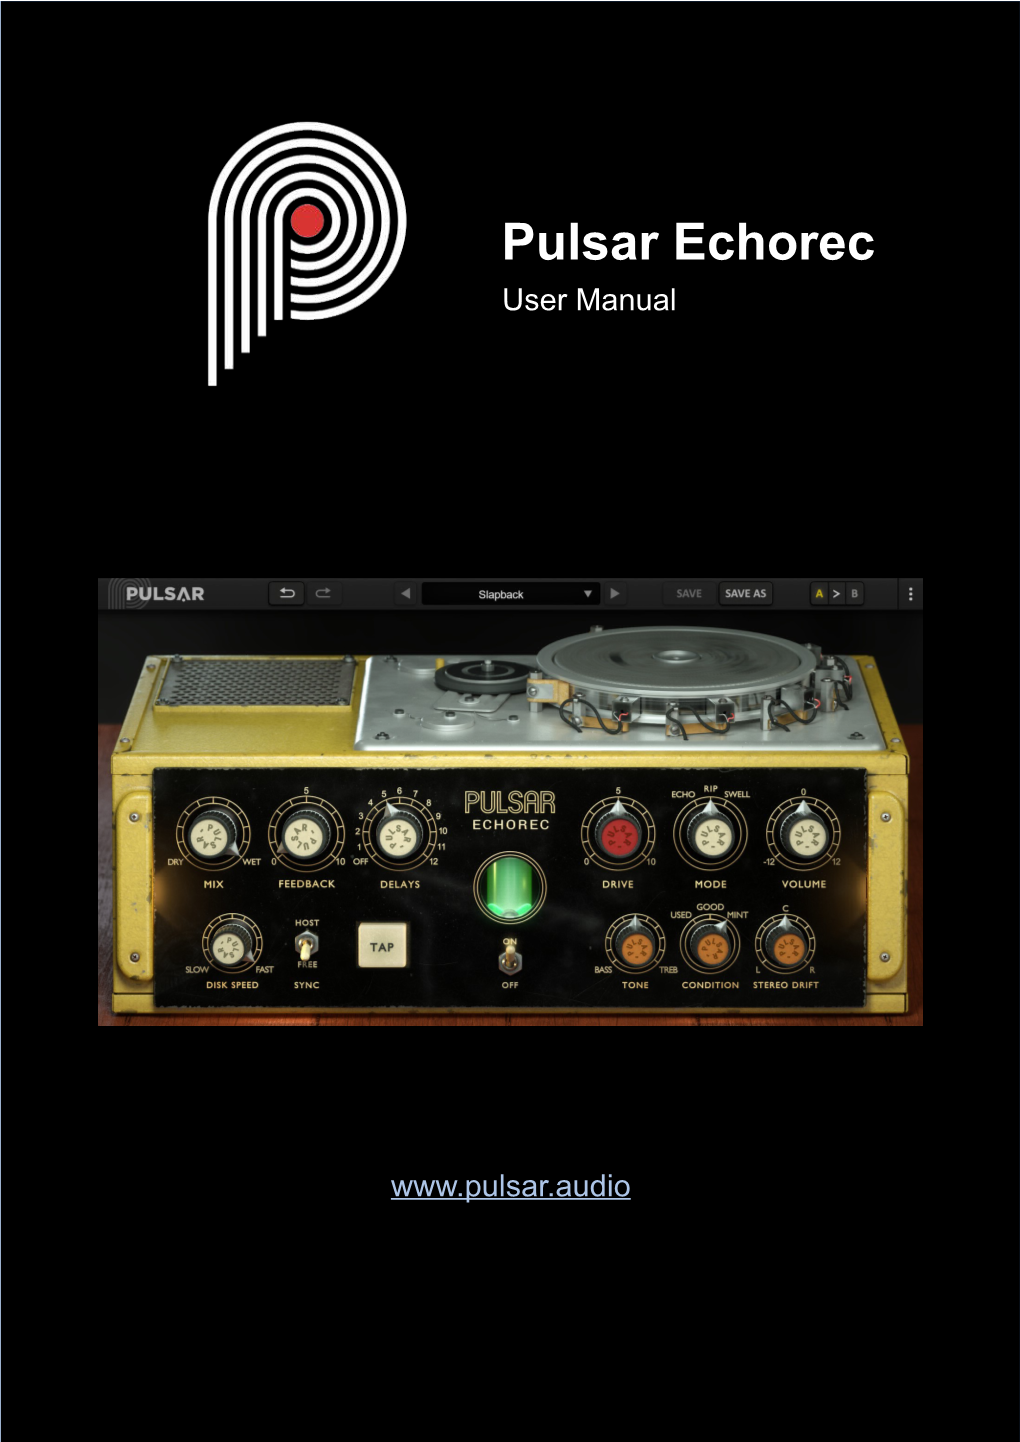 Pulsar Echorec User Manual